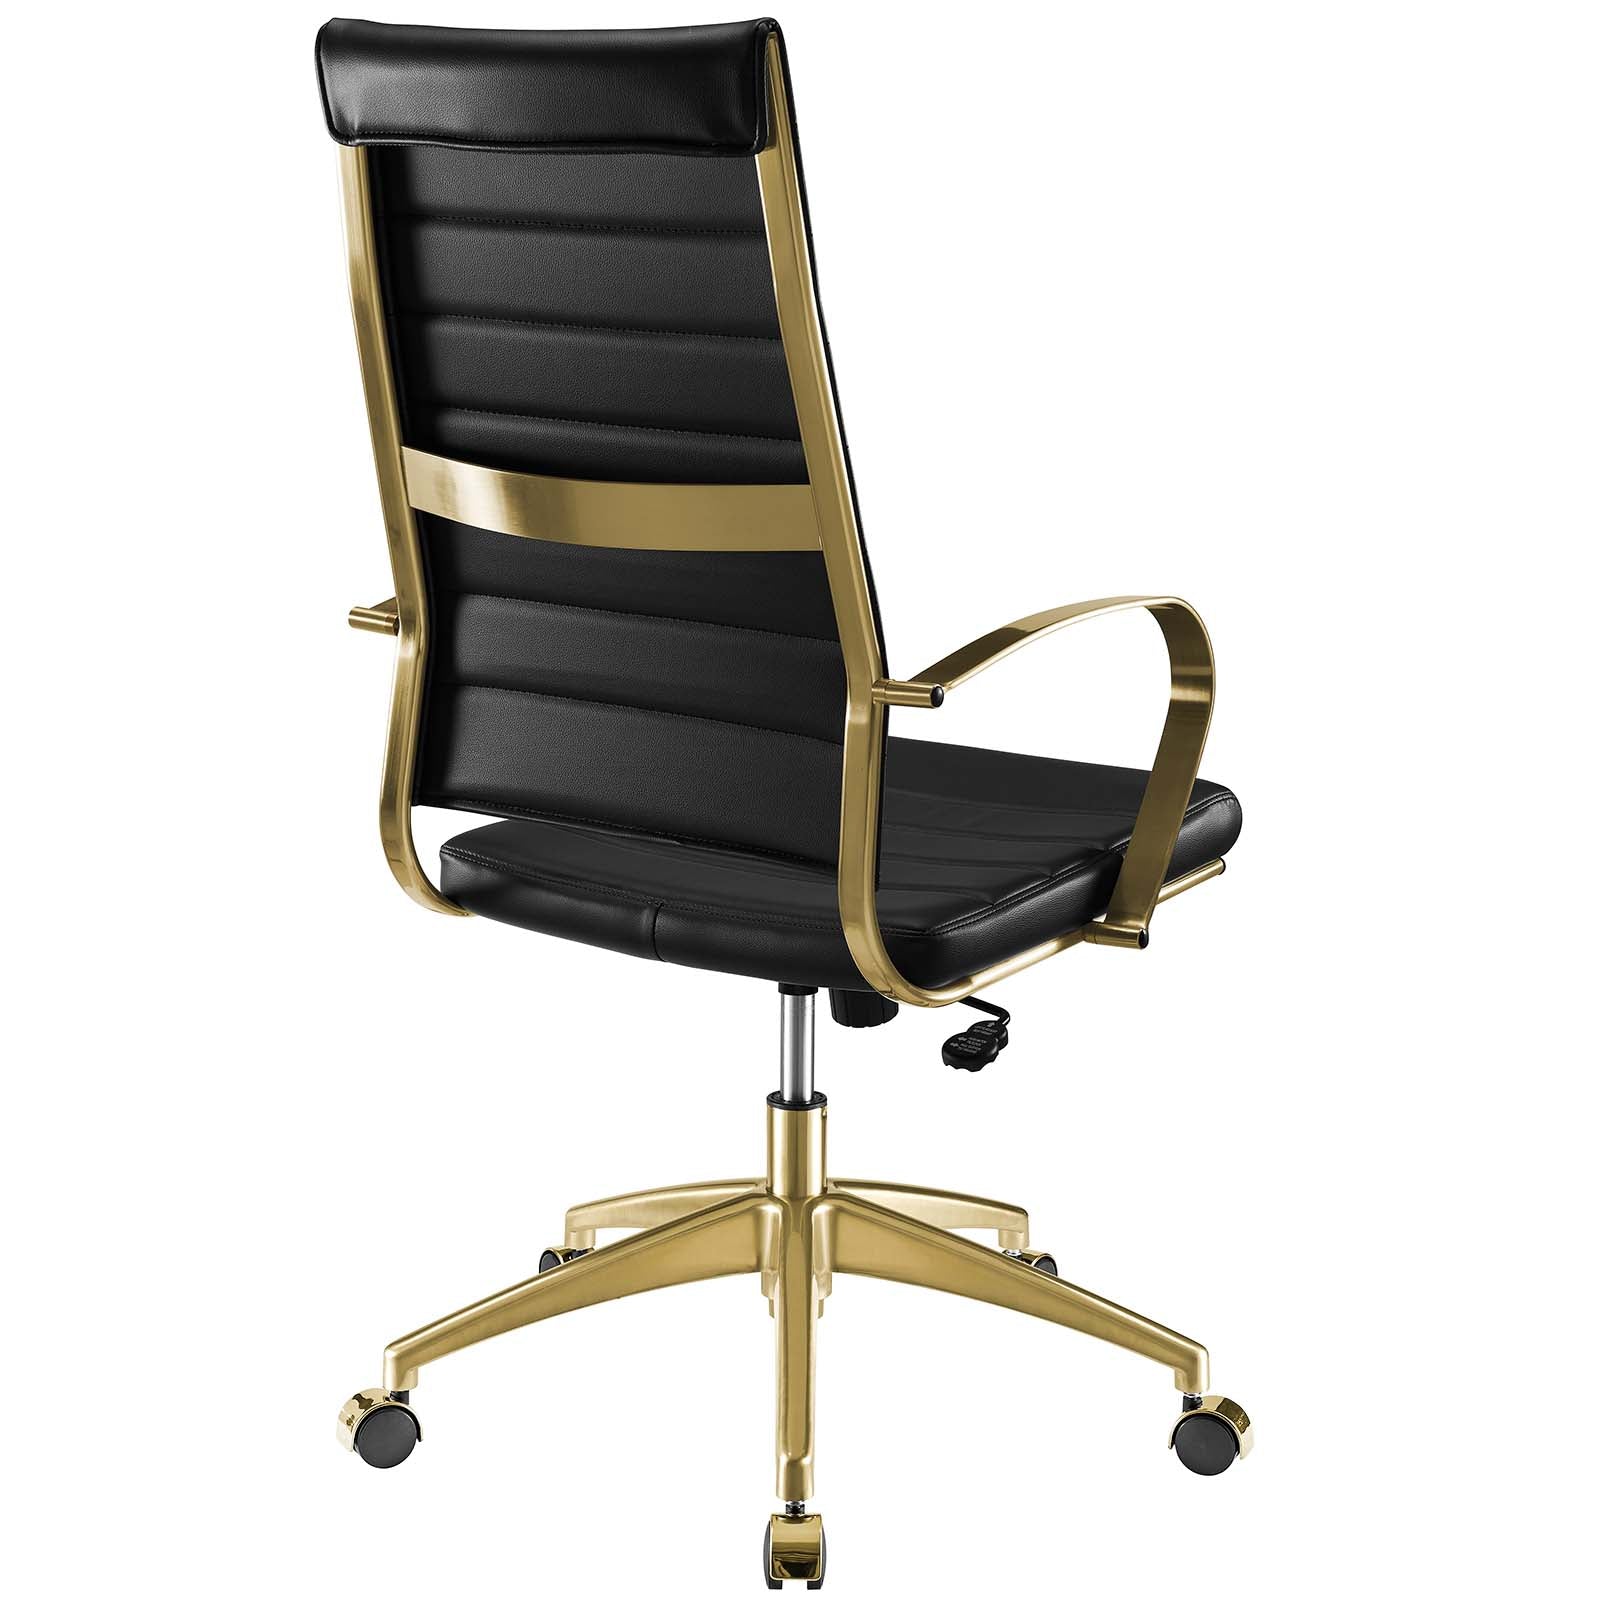 Jive Gold High Back Office Chair - Black